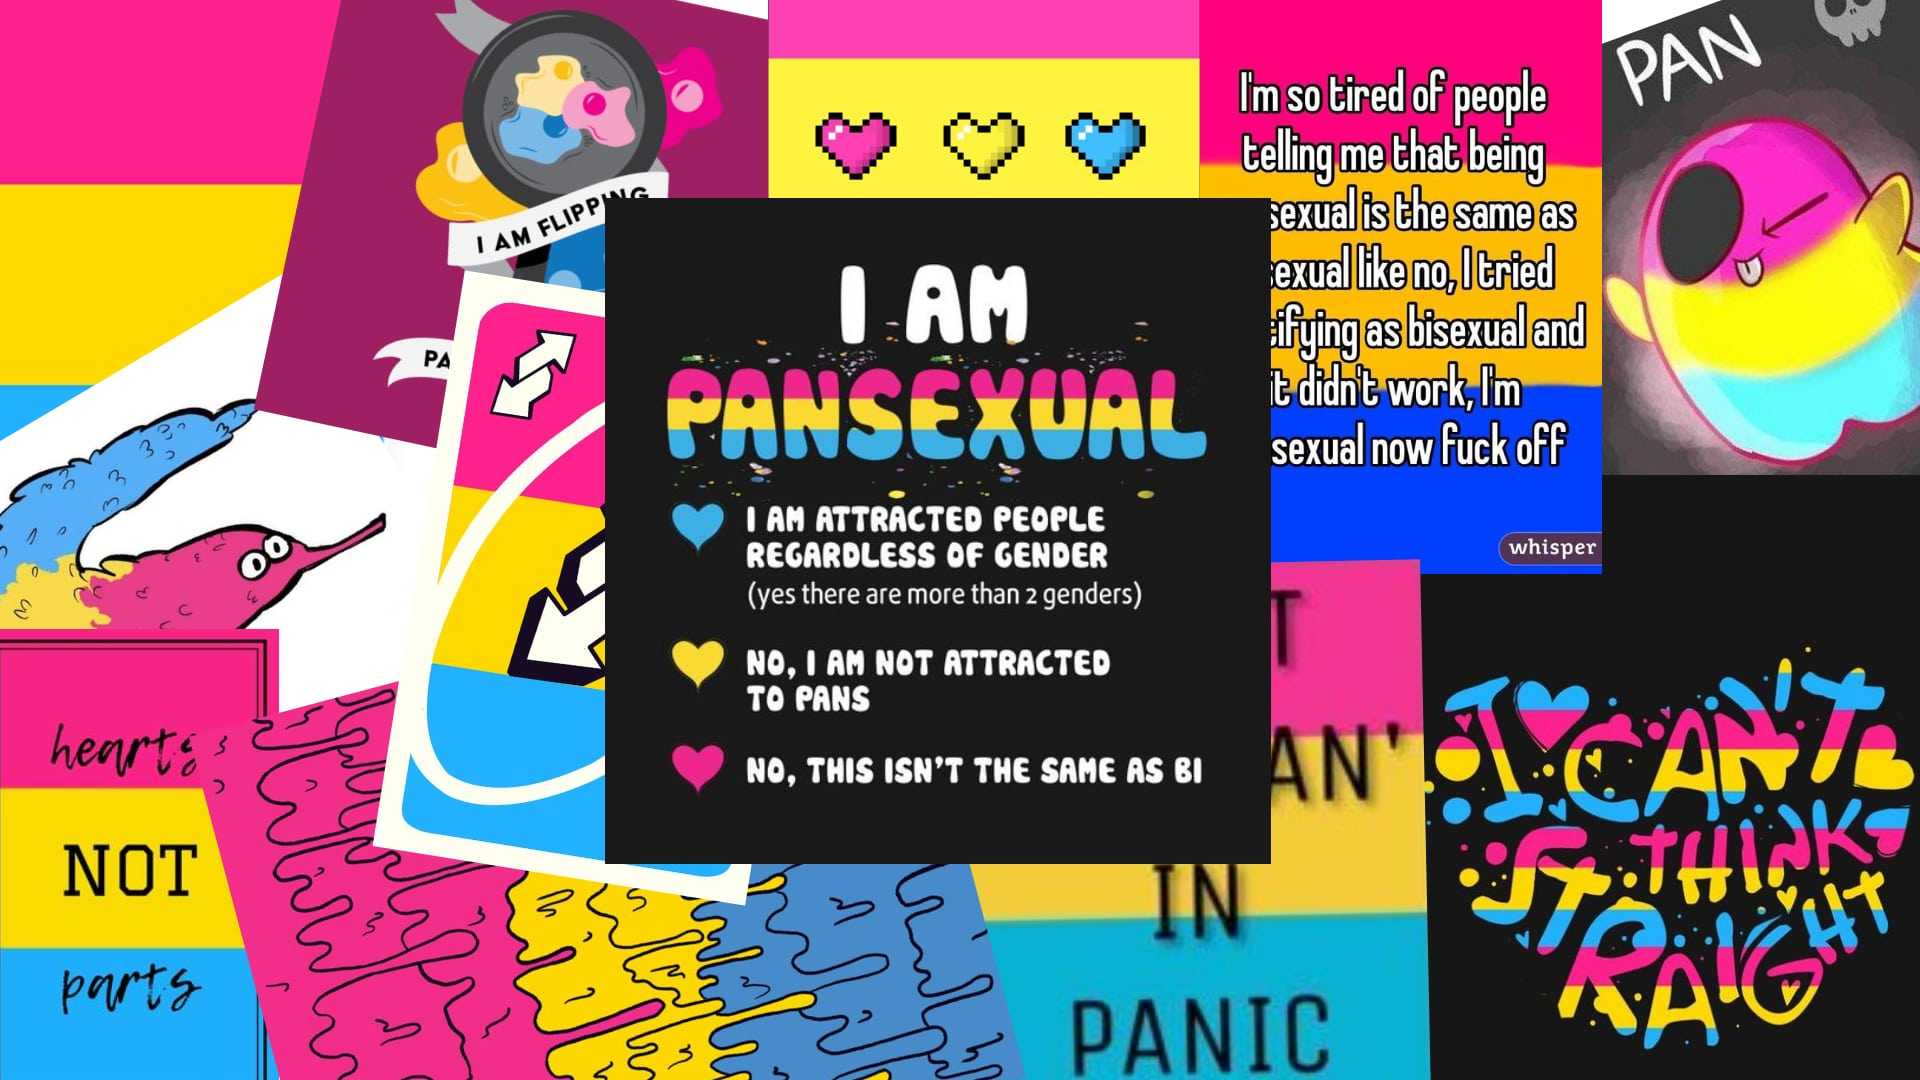 Pansexual Image To U